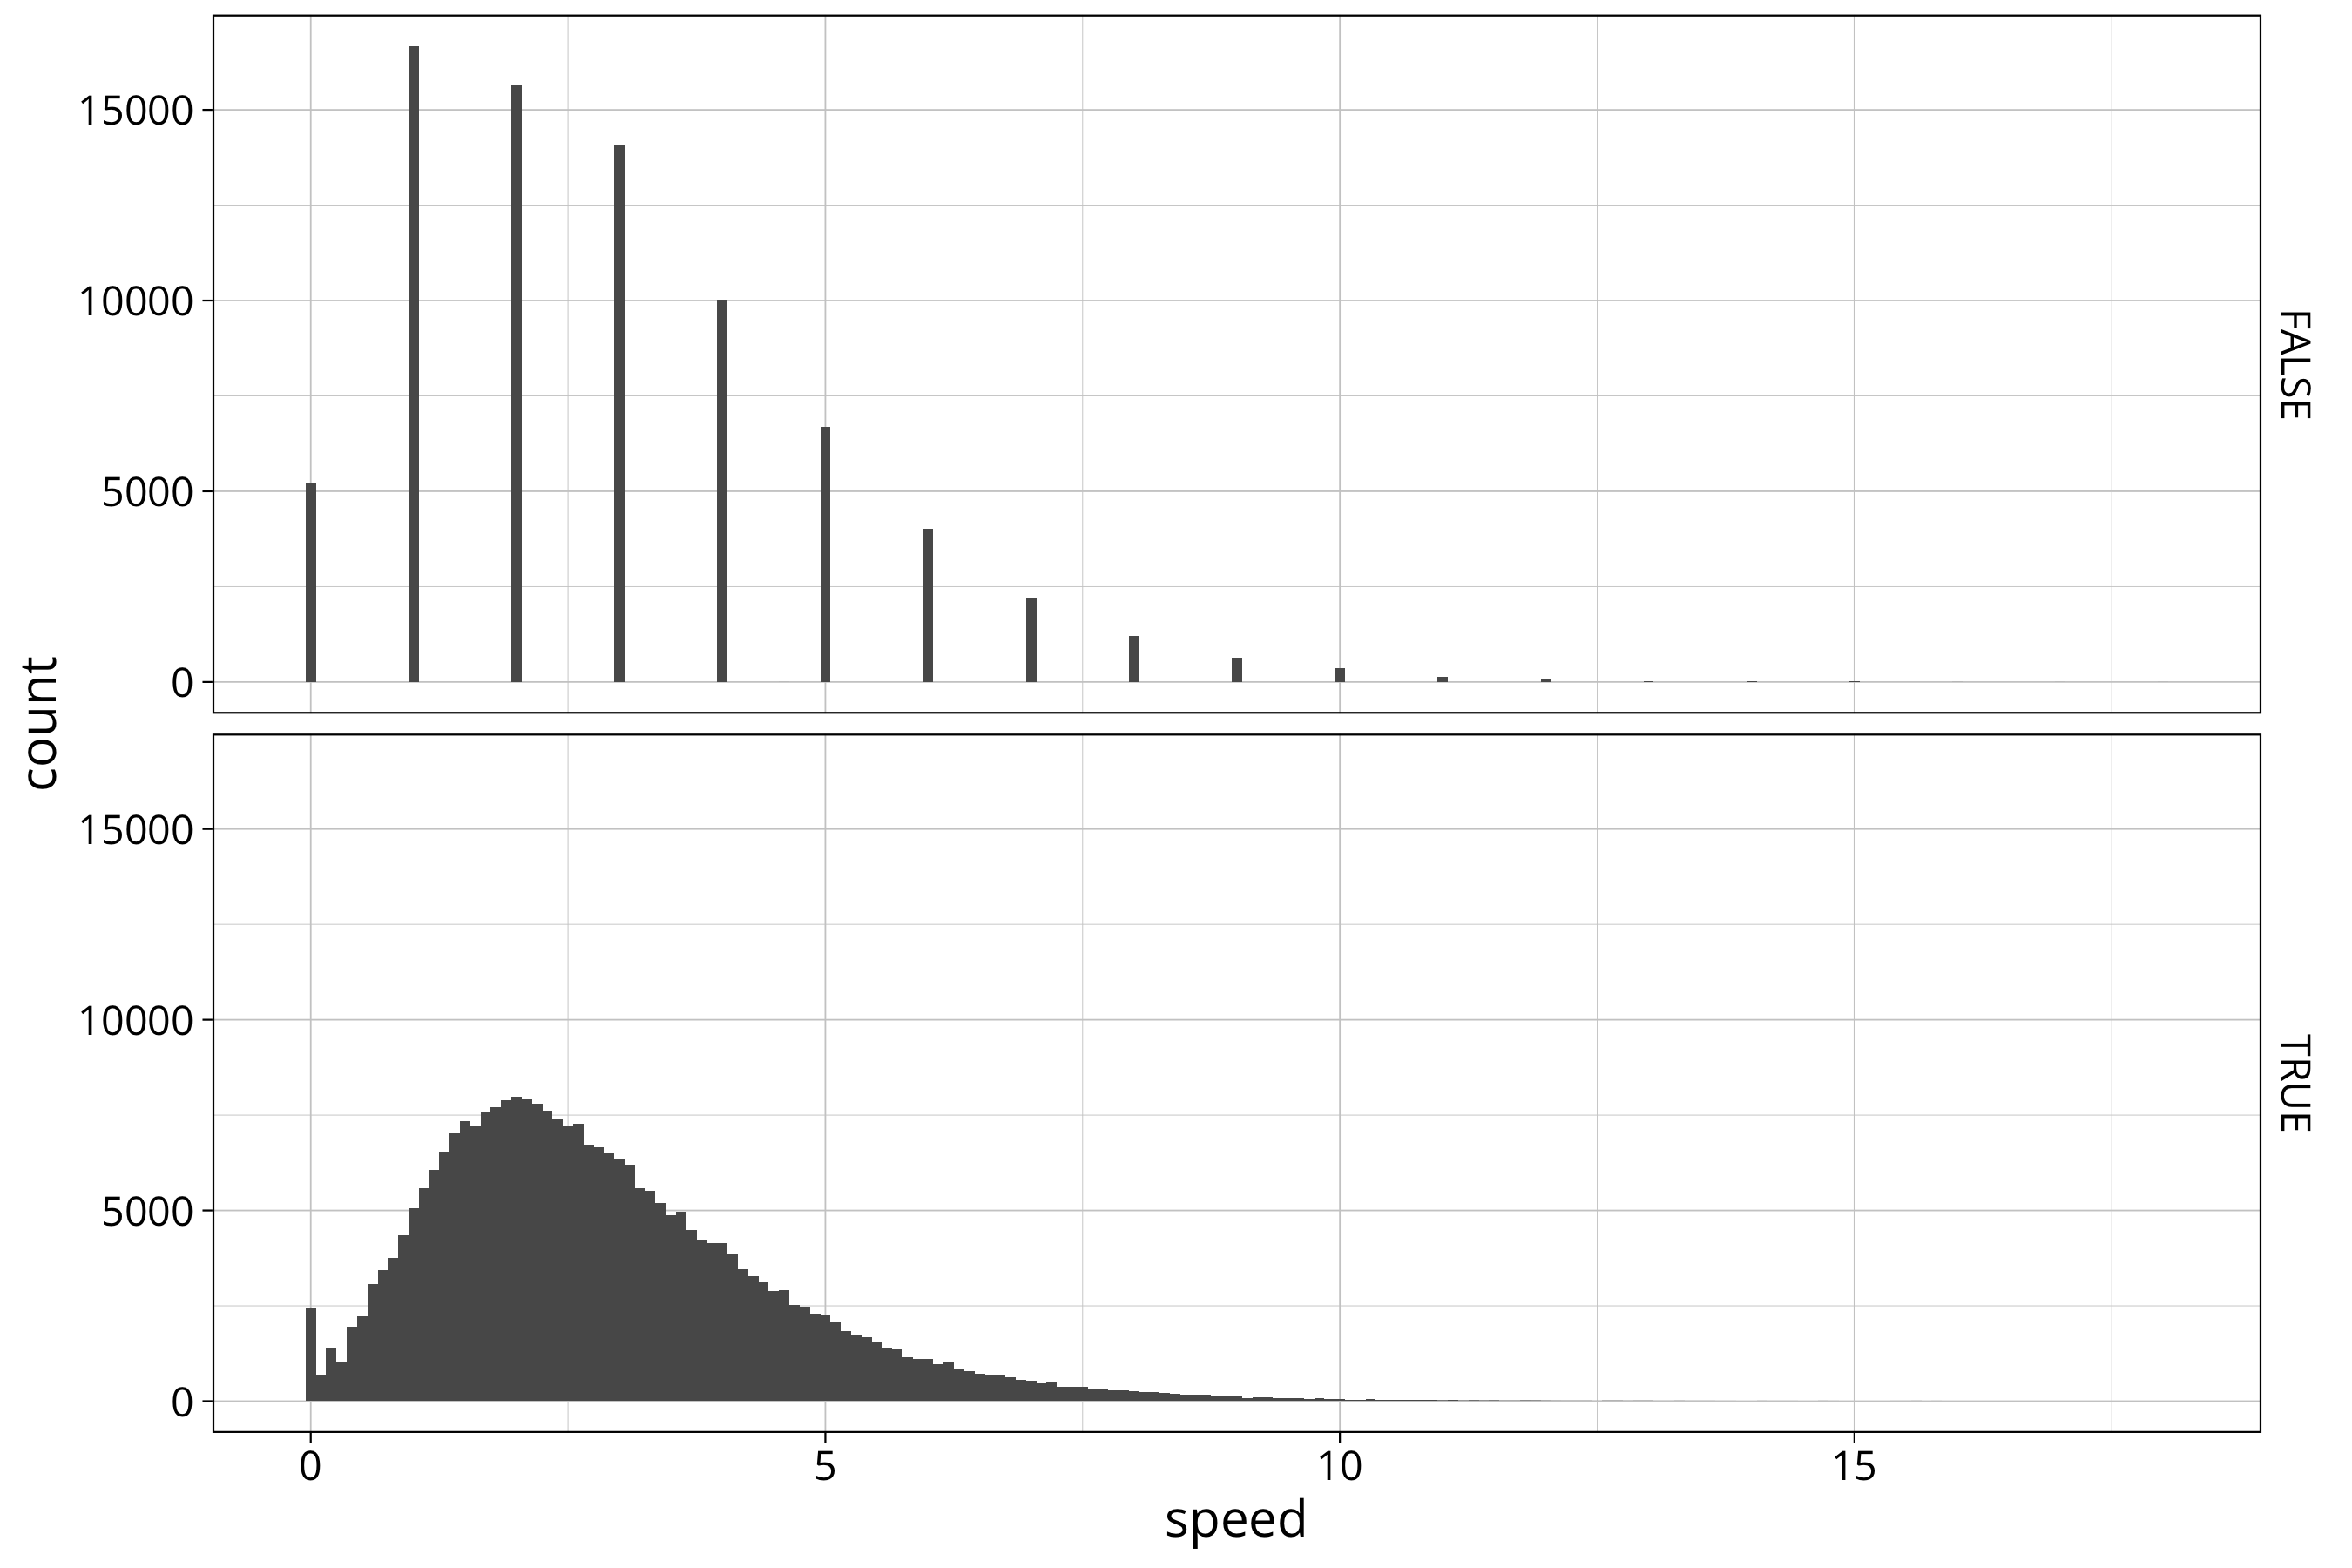 plot of chunk histogram wind data devidec